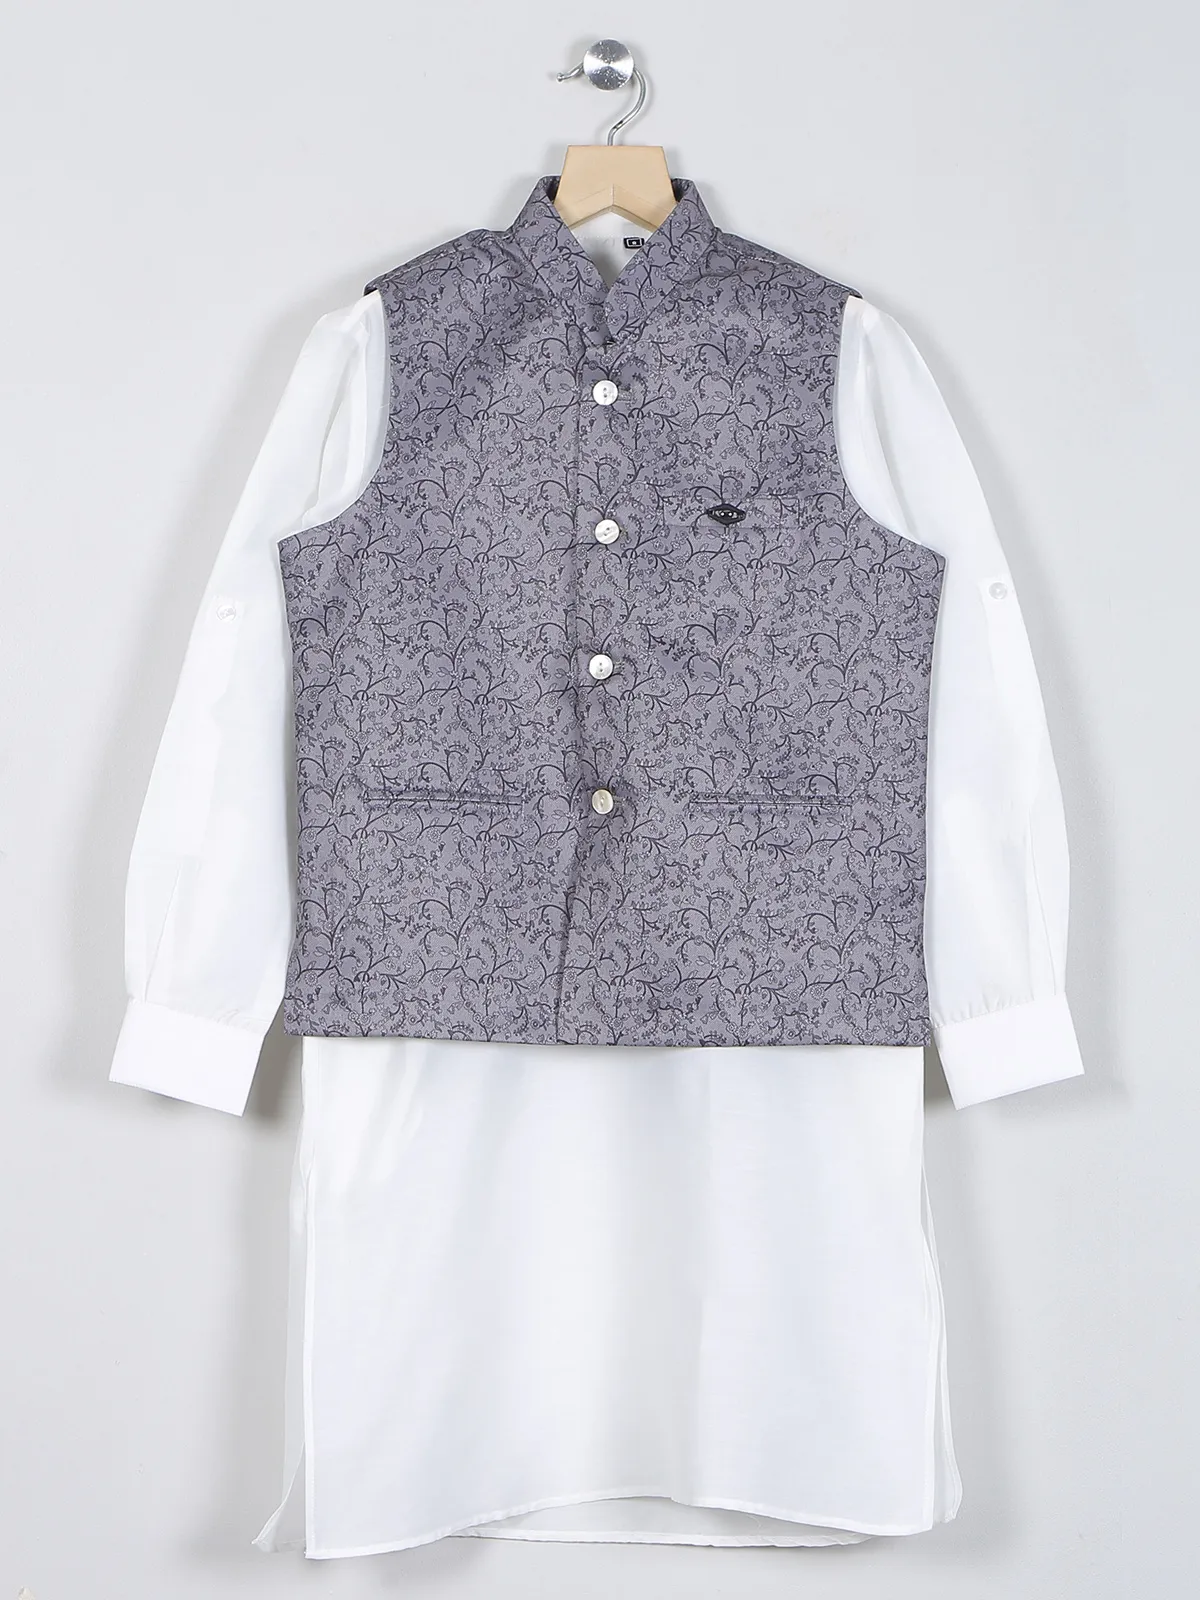 Grey cotton festive wear waistcoat set for boys